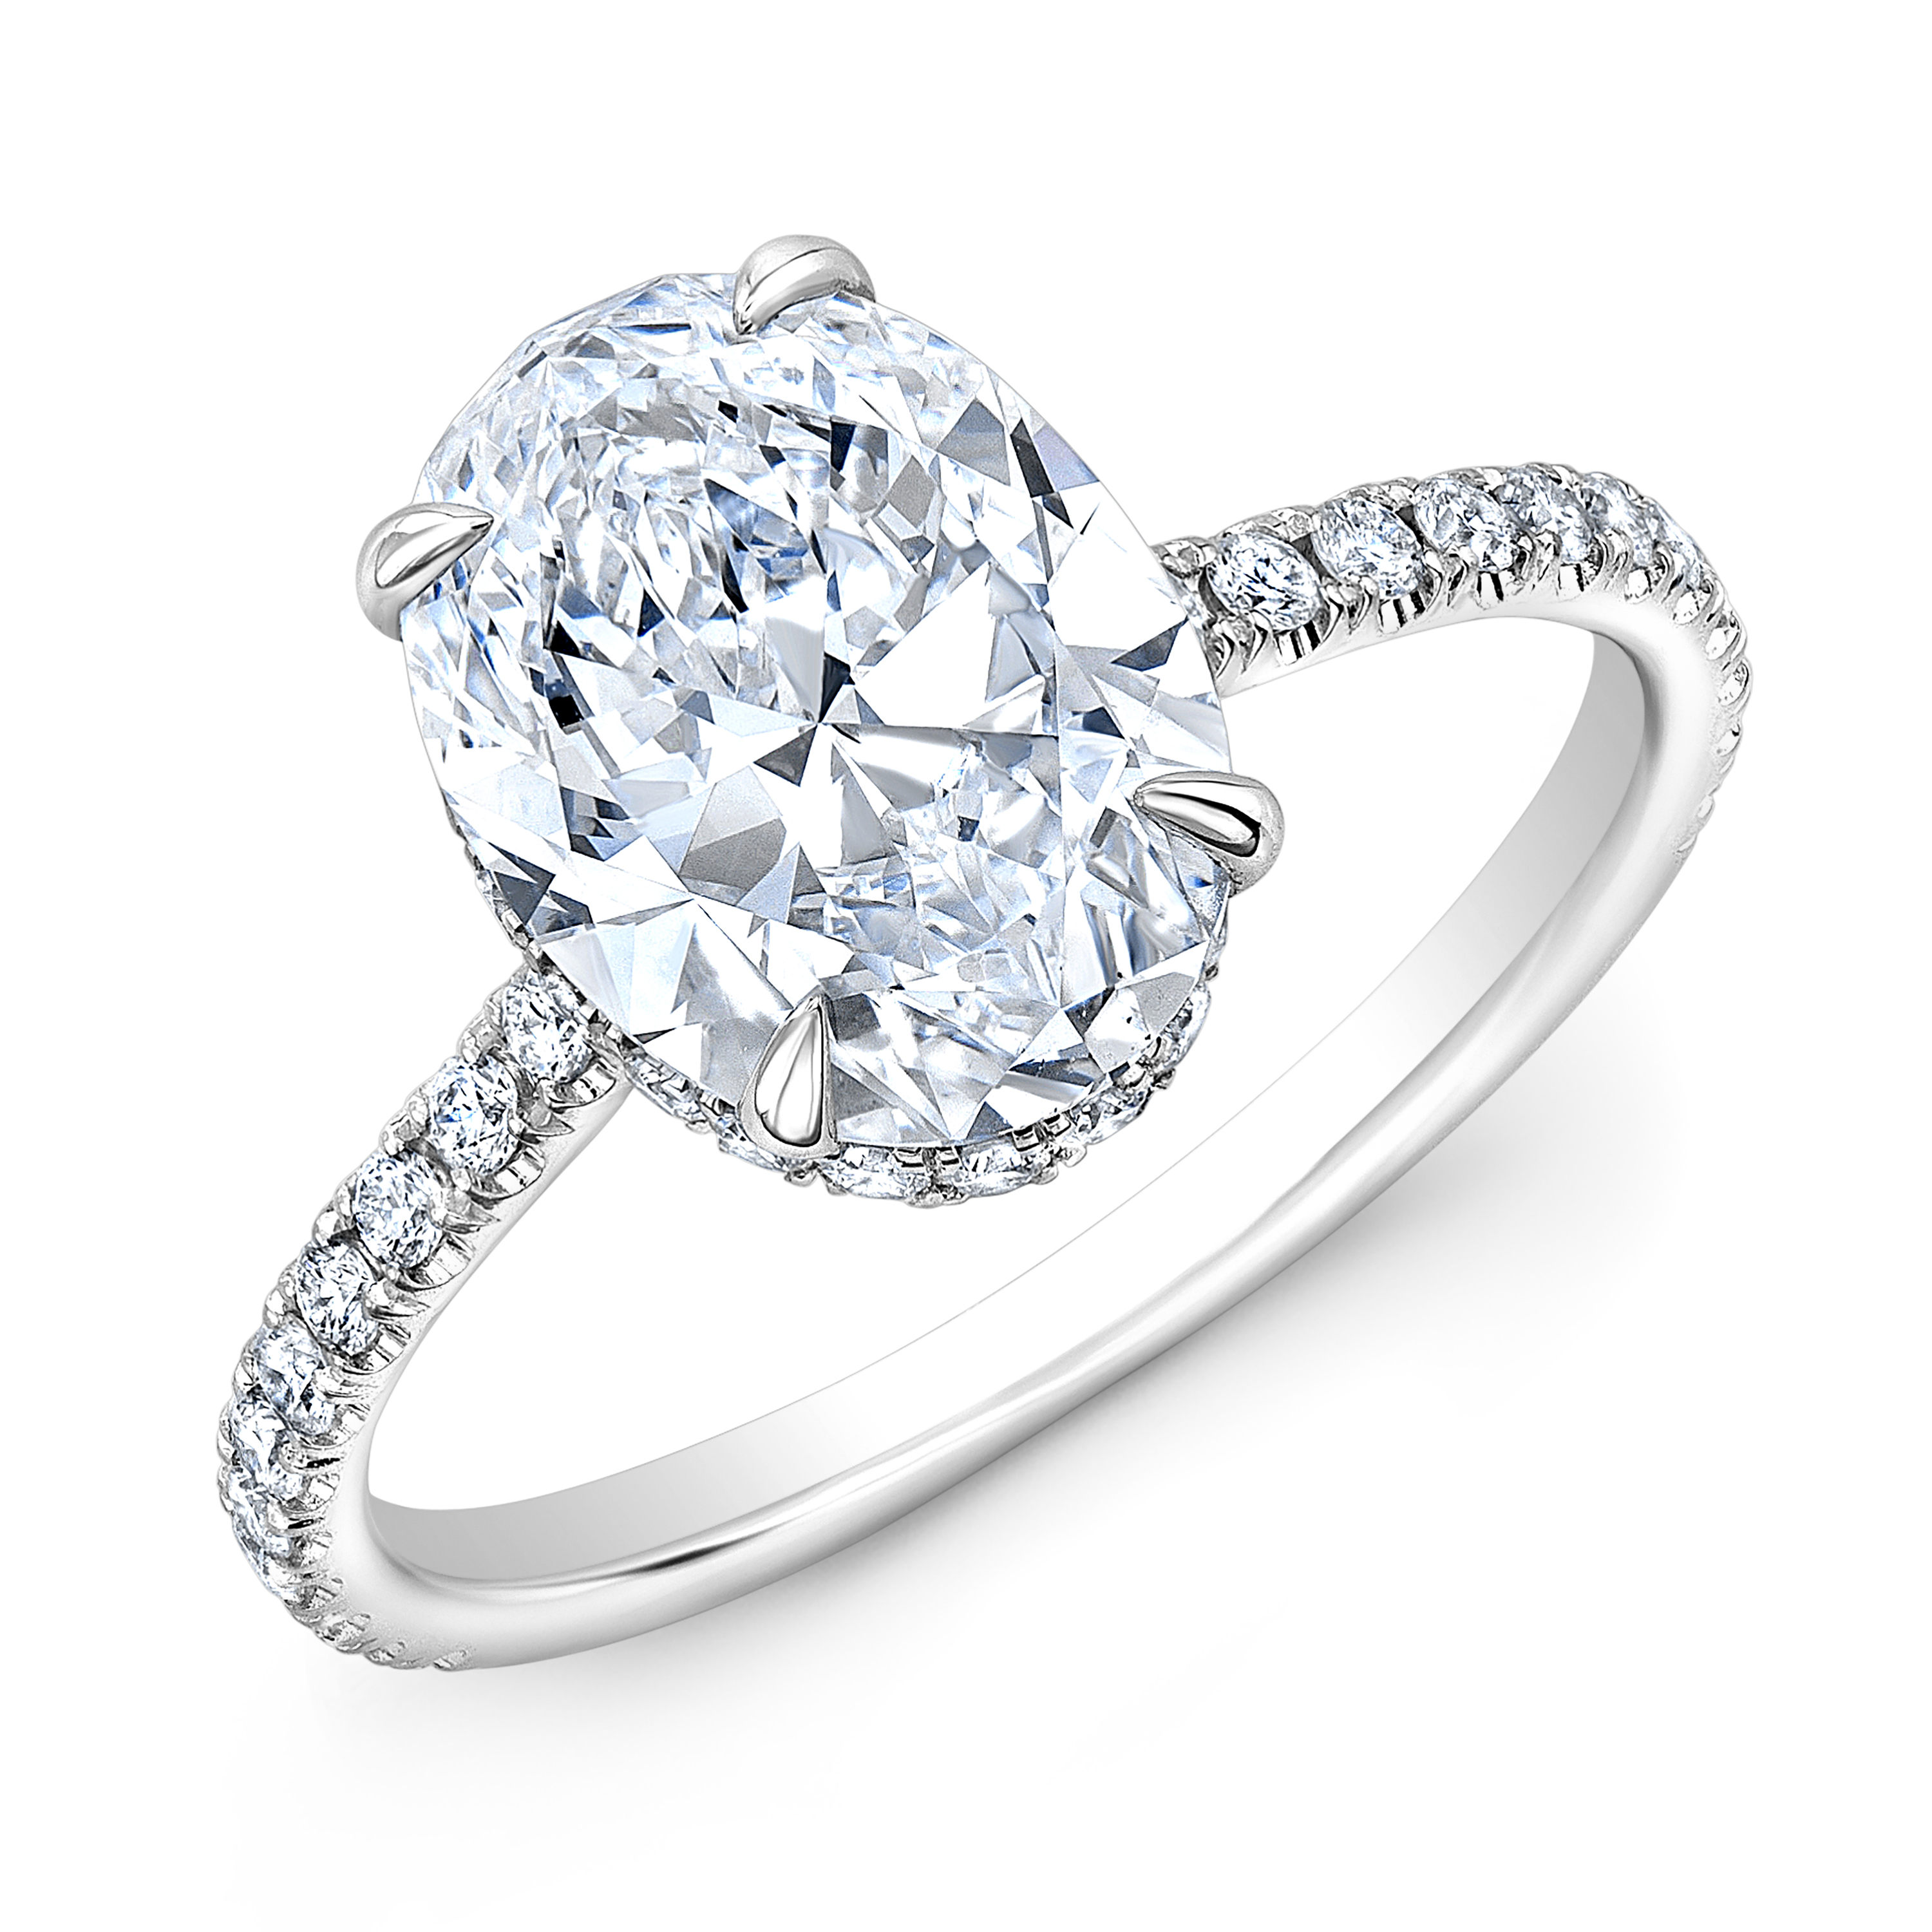 Best diamond ring designs